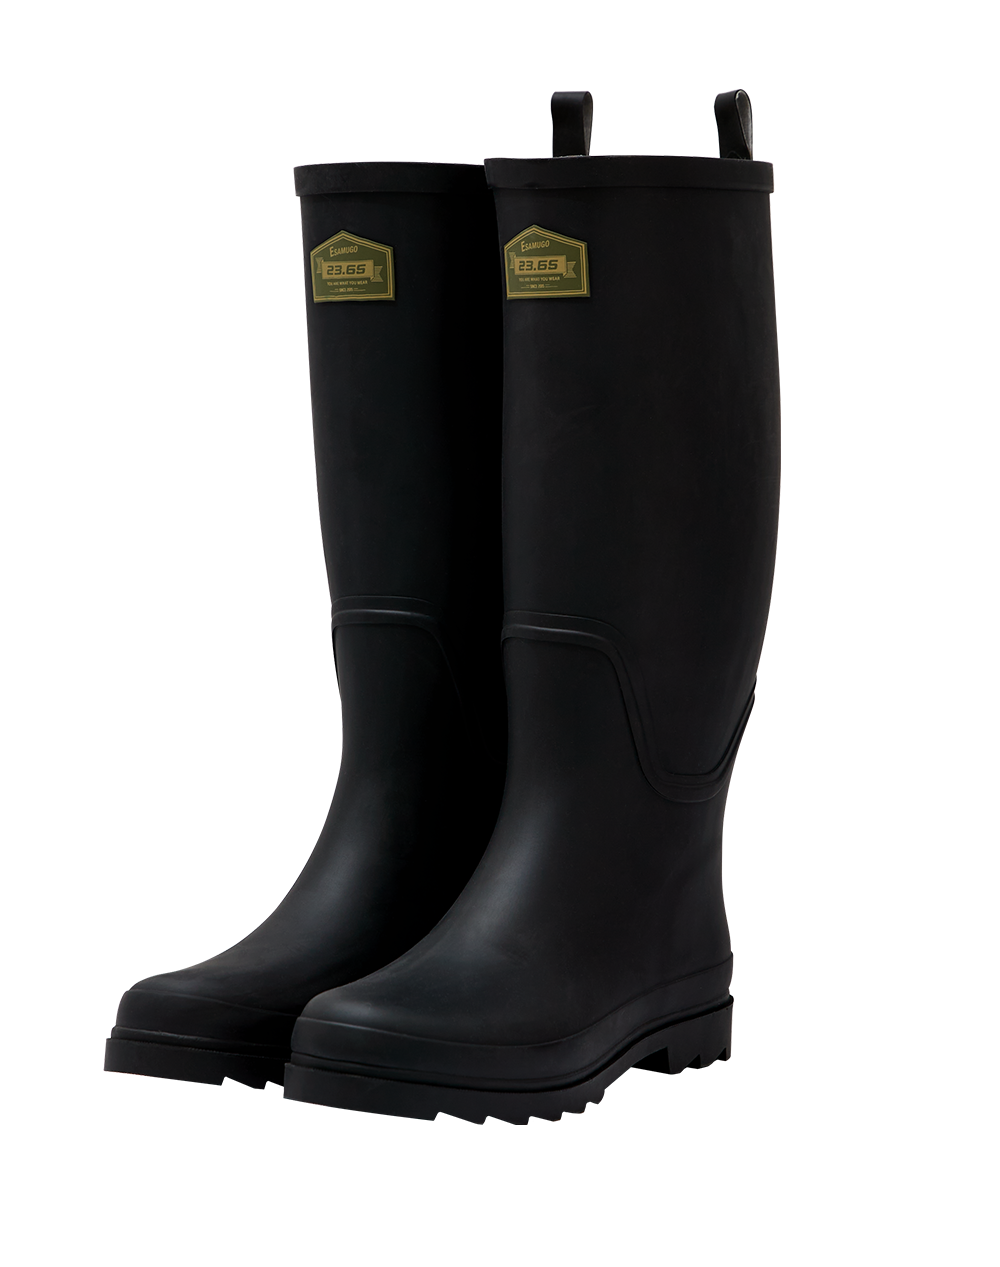 23.65 Rain Boots 長筒黑色雨靴